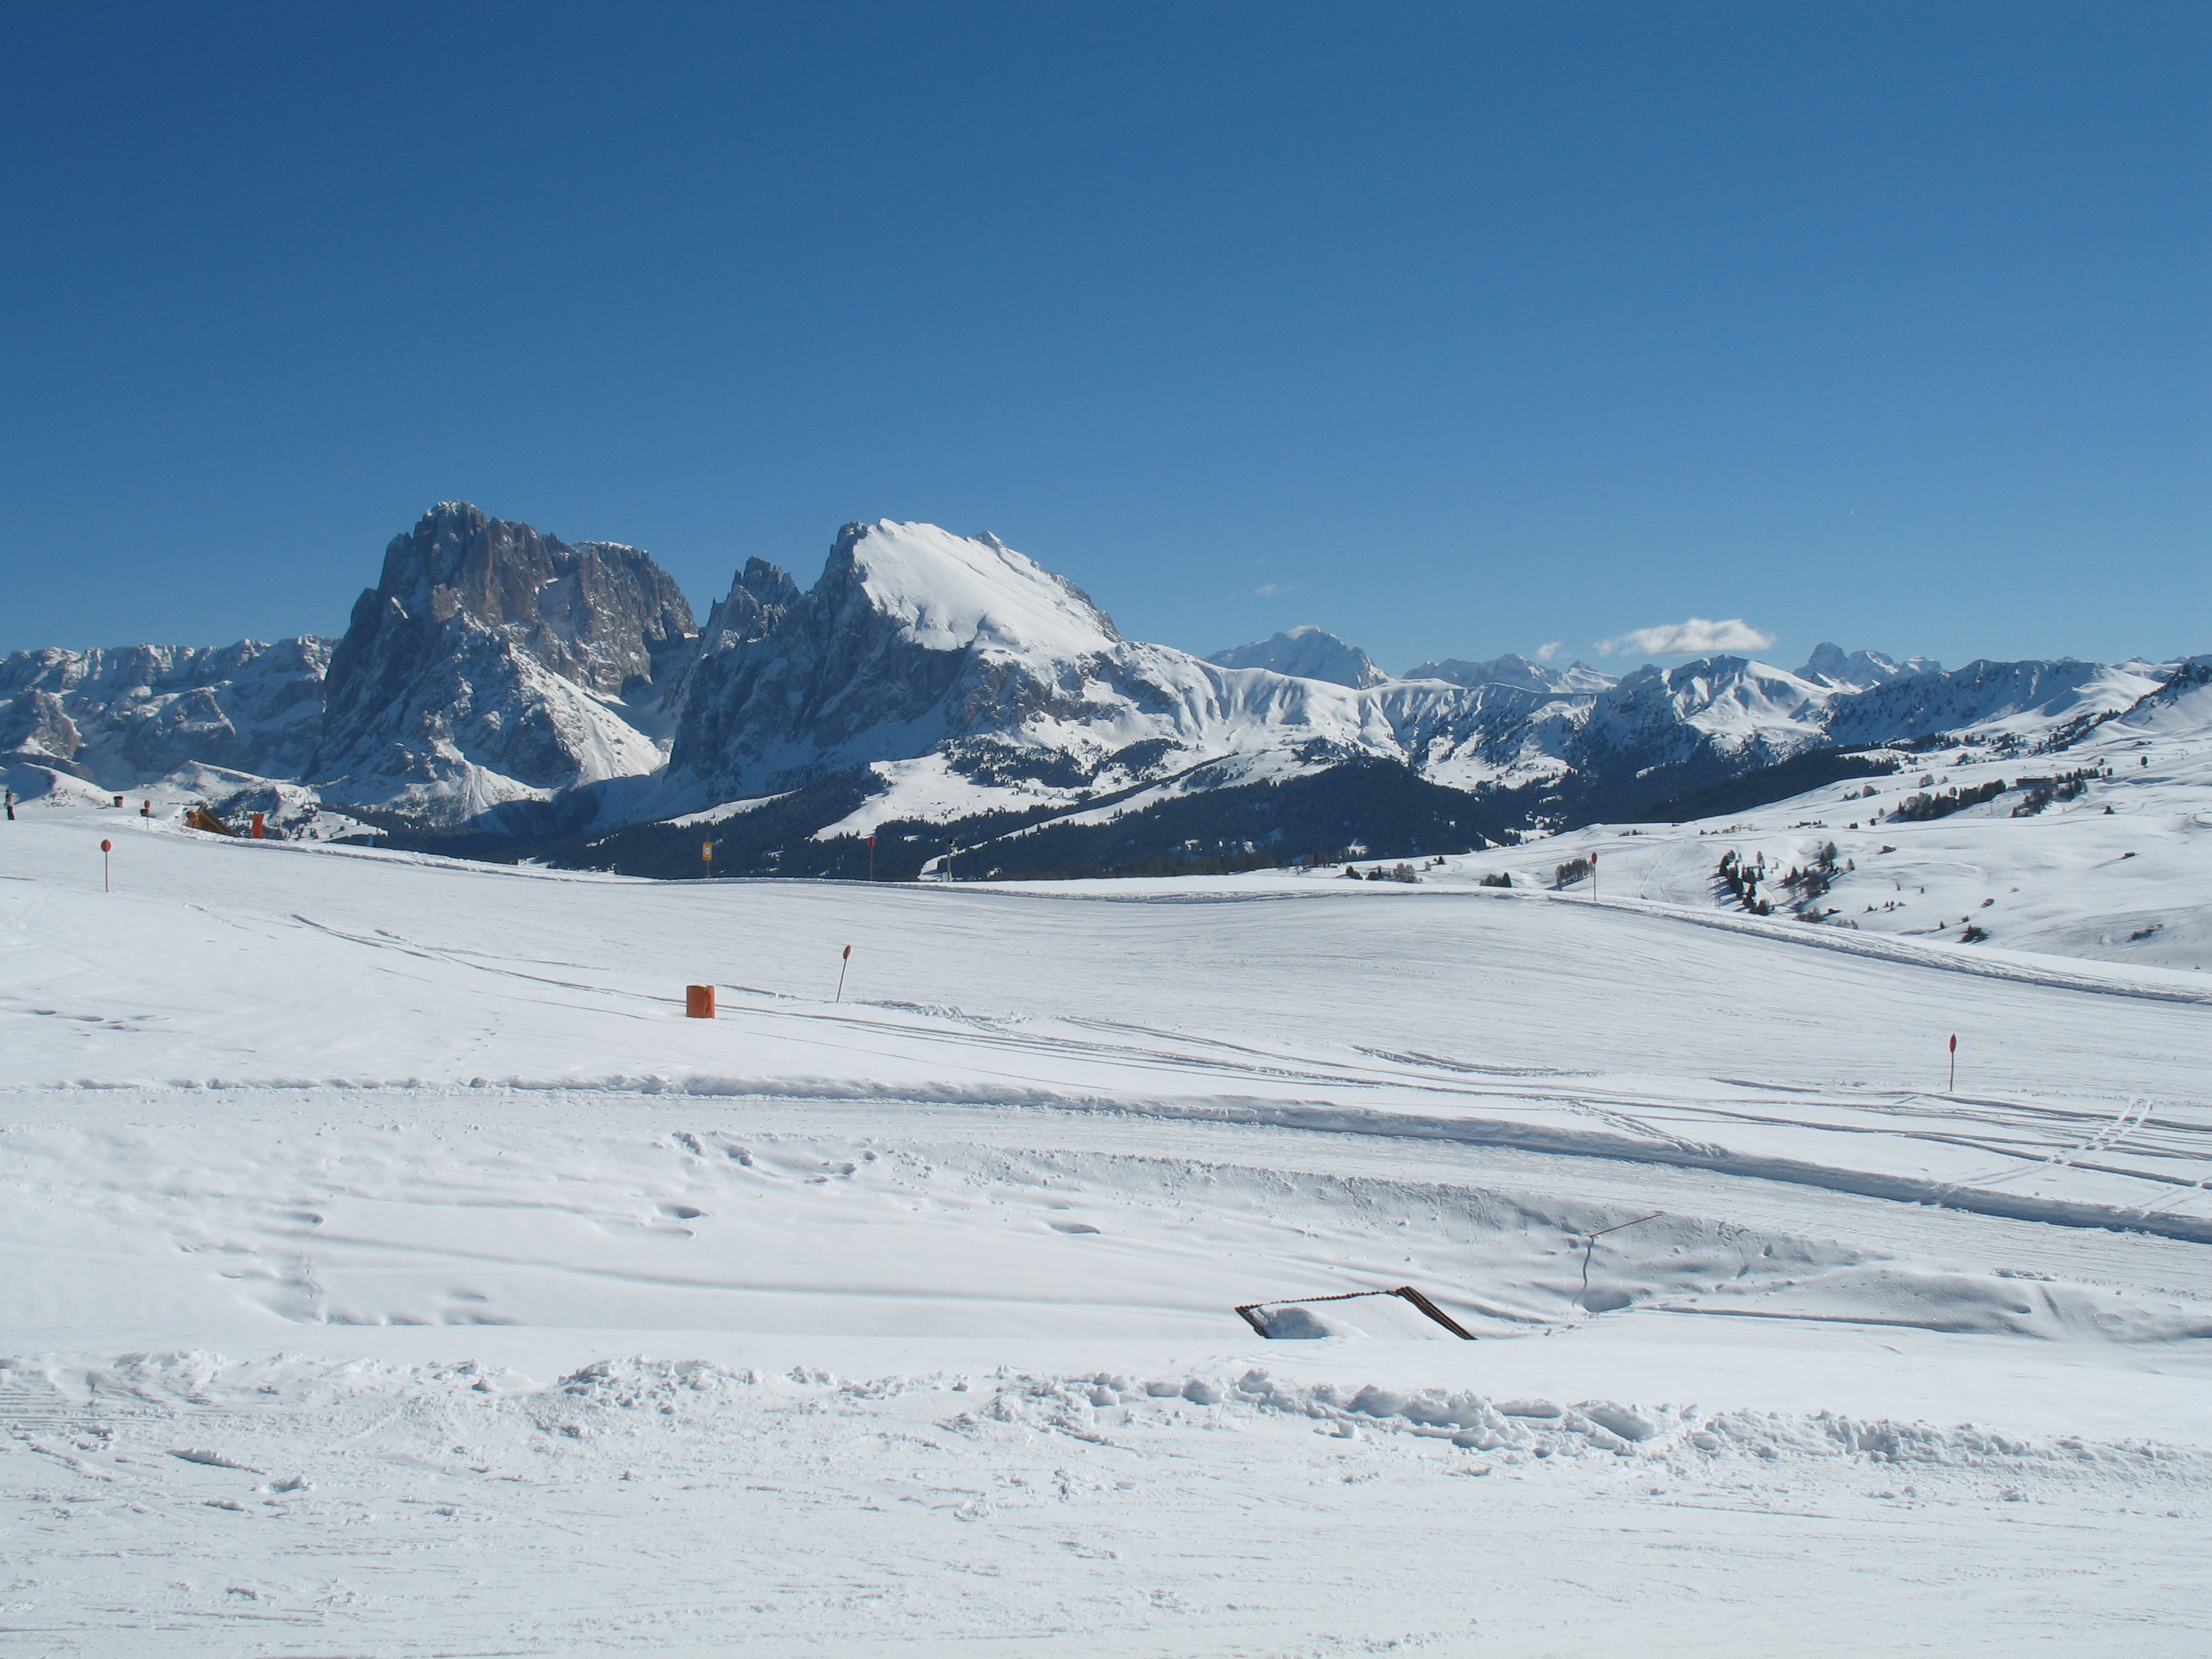 Skiing track. Ортизей Италия горнолыжный курорт. Ортизеи Италия горнолыжный курорт. Намороженный лед Ортизей. Ski track.